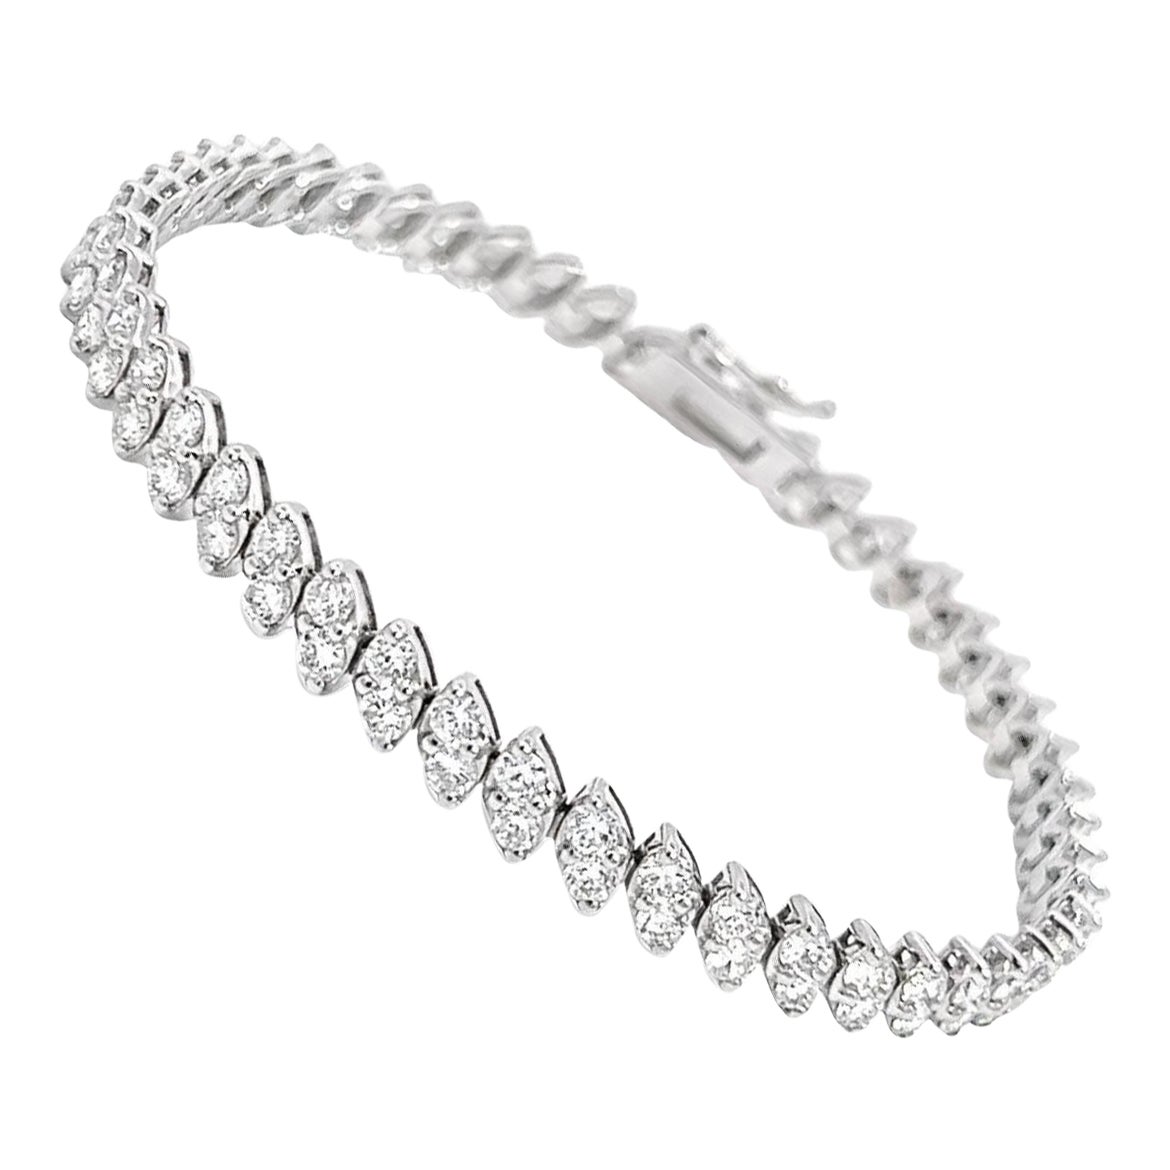 Diamond Fashion Bracelet in 14k White Gold with Natural Full Cut Diamonds